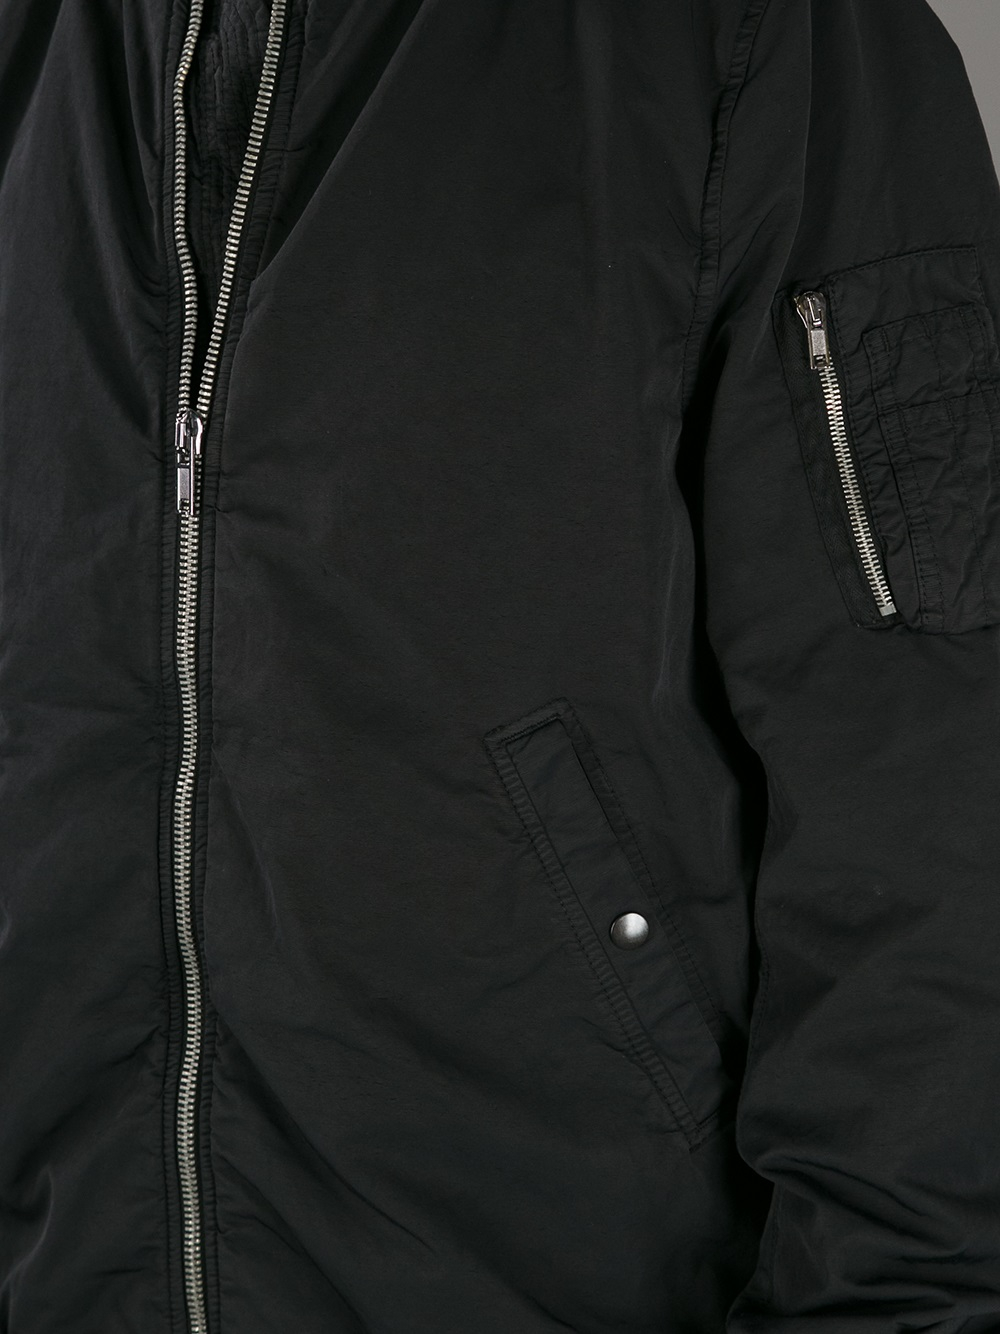 Rick Owens Drkshdw Bomber Jacket in Black for Men - Lyst